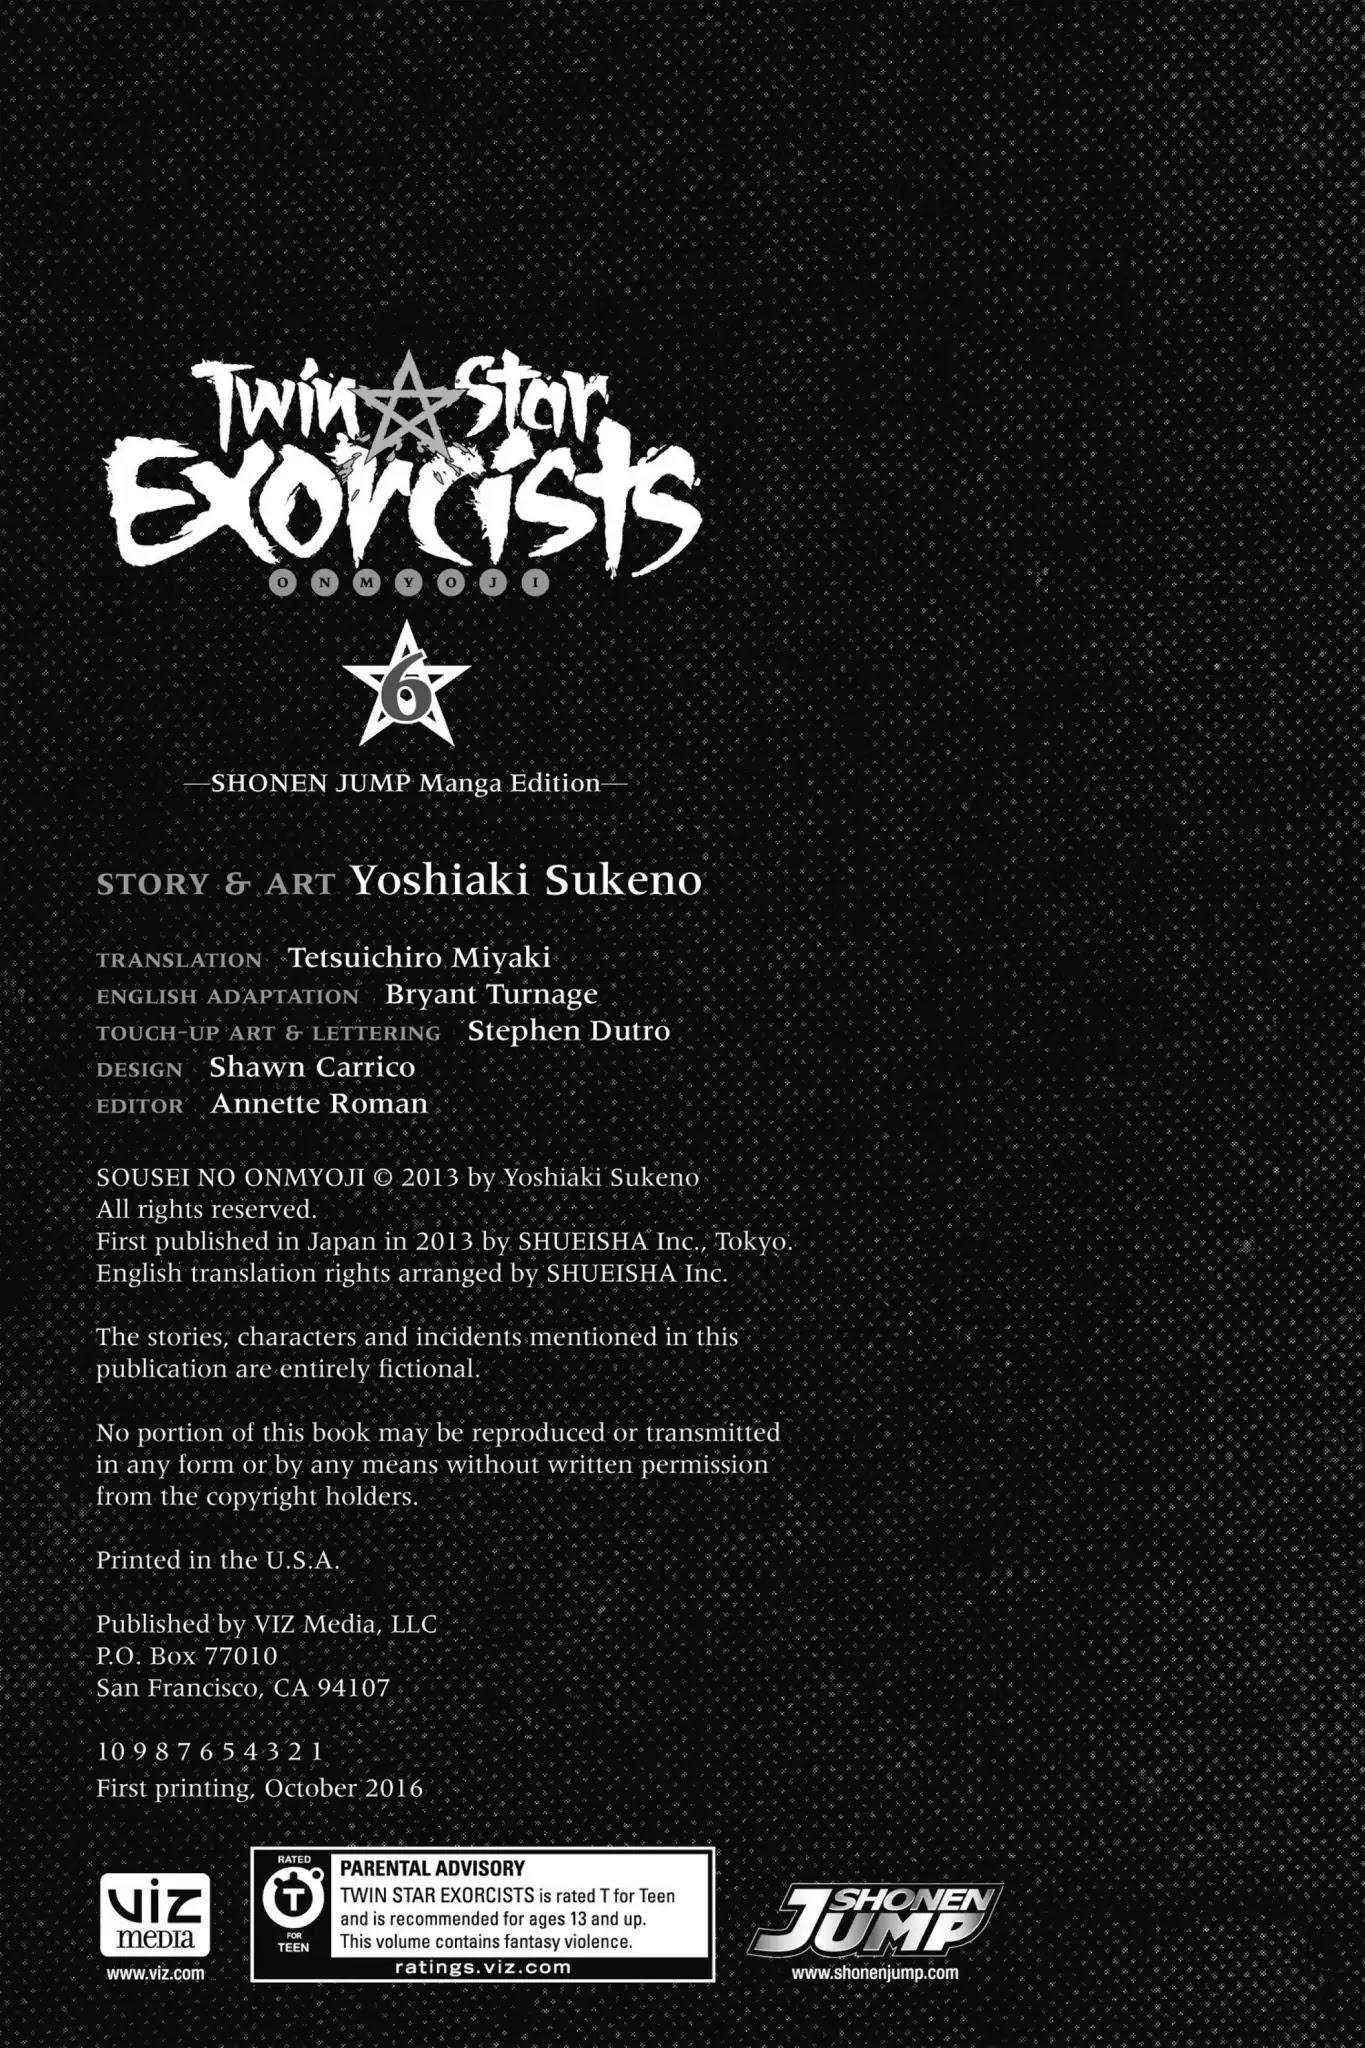 Sousei No Onmyouji Vol.6 Bonus: Suzaku's Ceremony Of Accession To The Twelve Guardians  